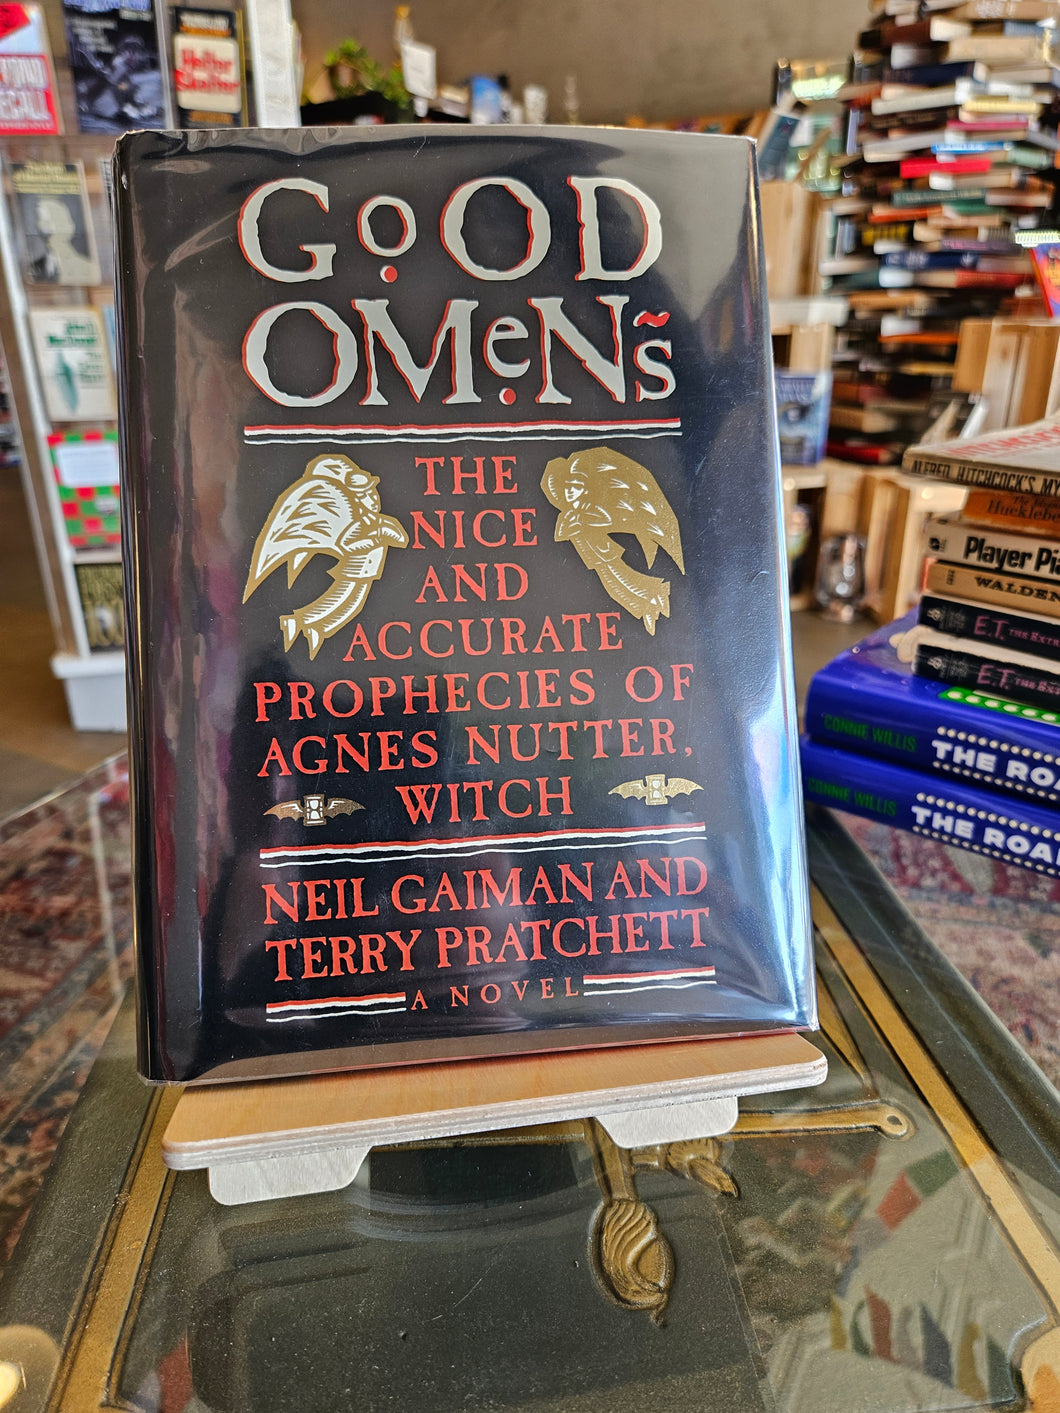 Good Omens by Neil Gaiman and Terry Pratchett (1st edition)